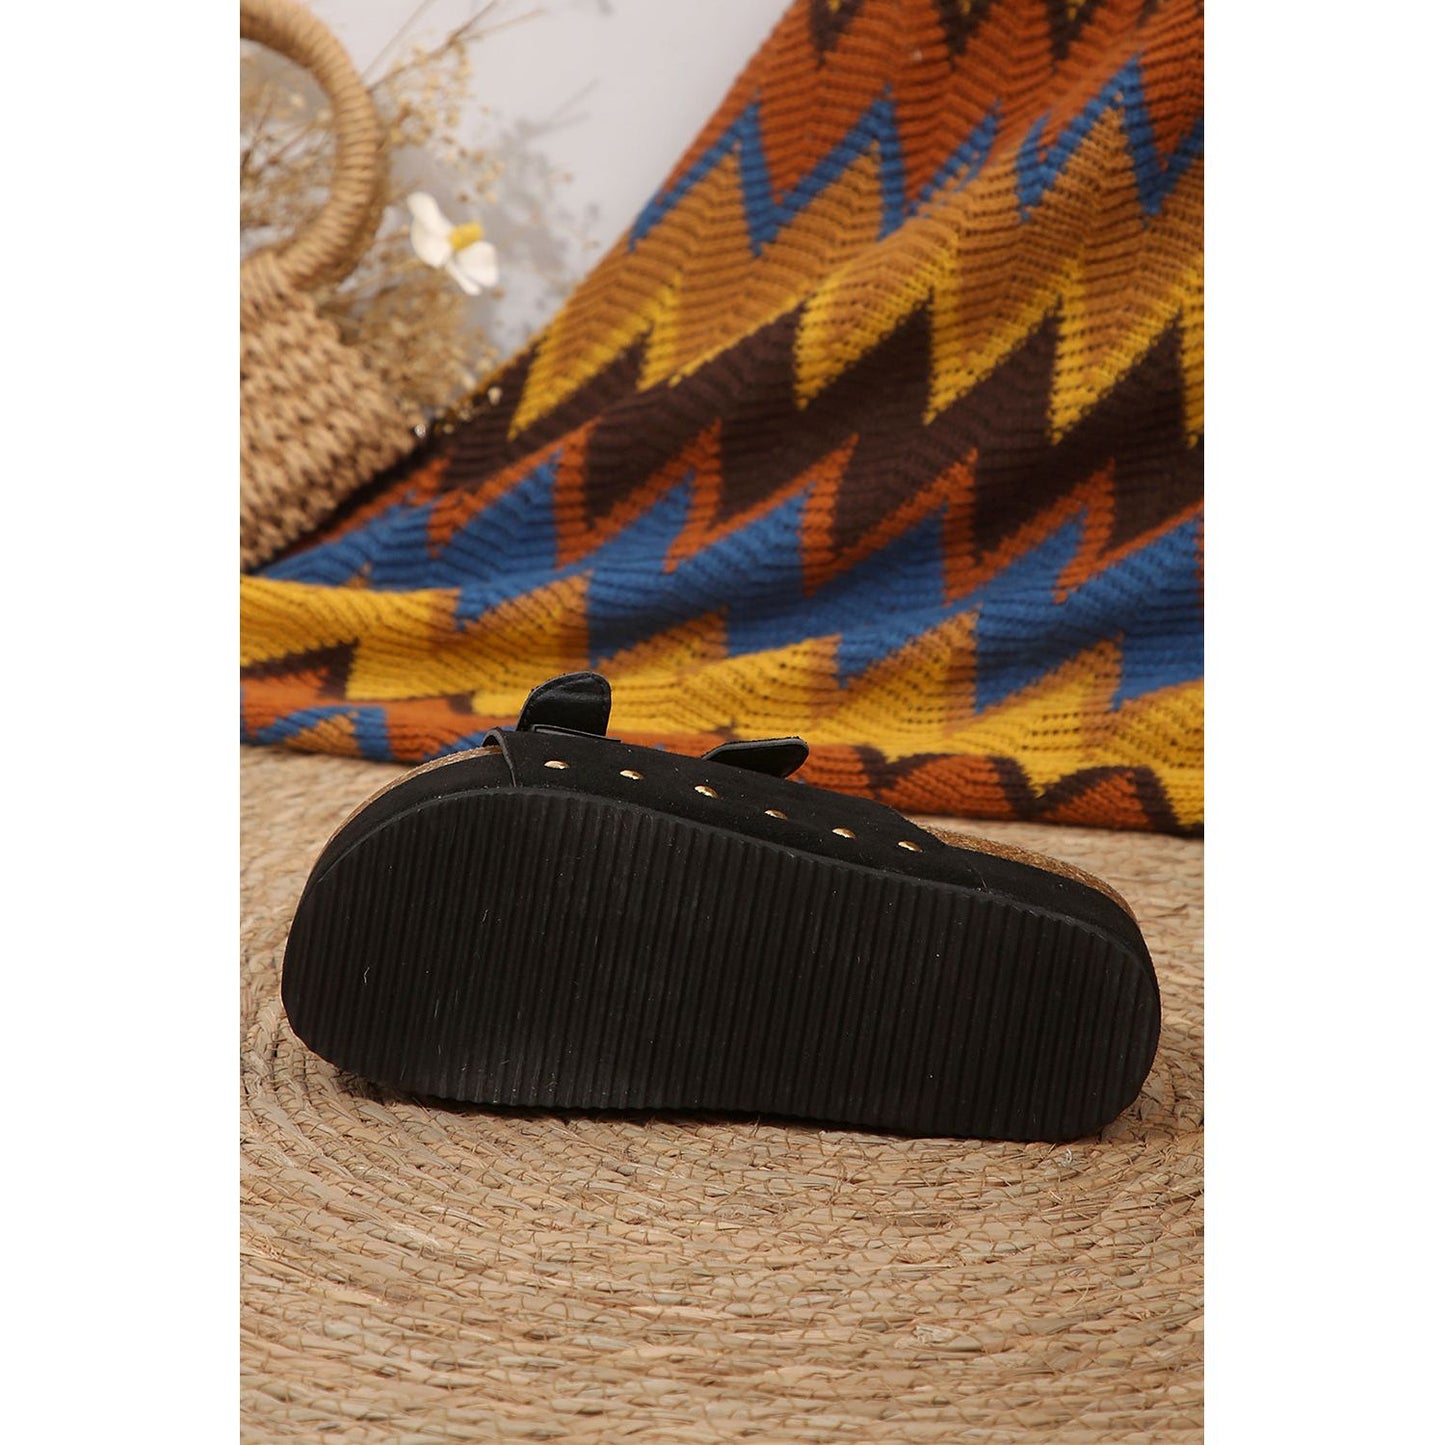 Black Suede Buckle Decor Footbed Sandal Slippers